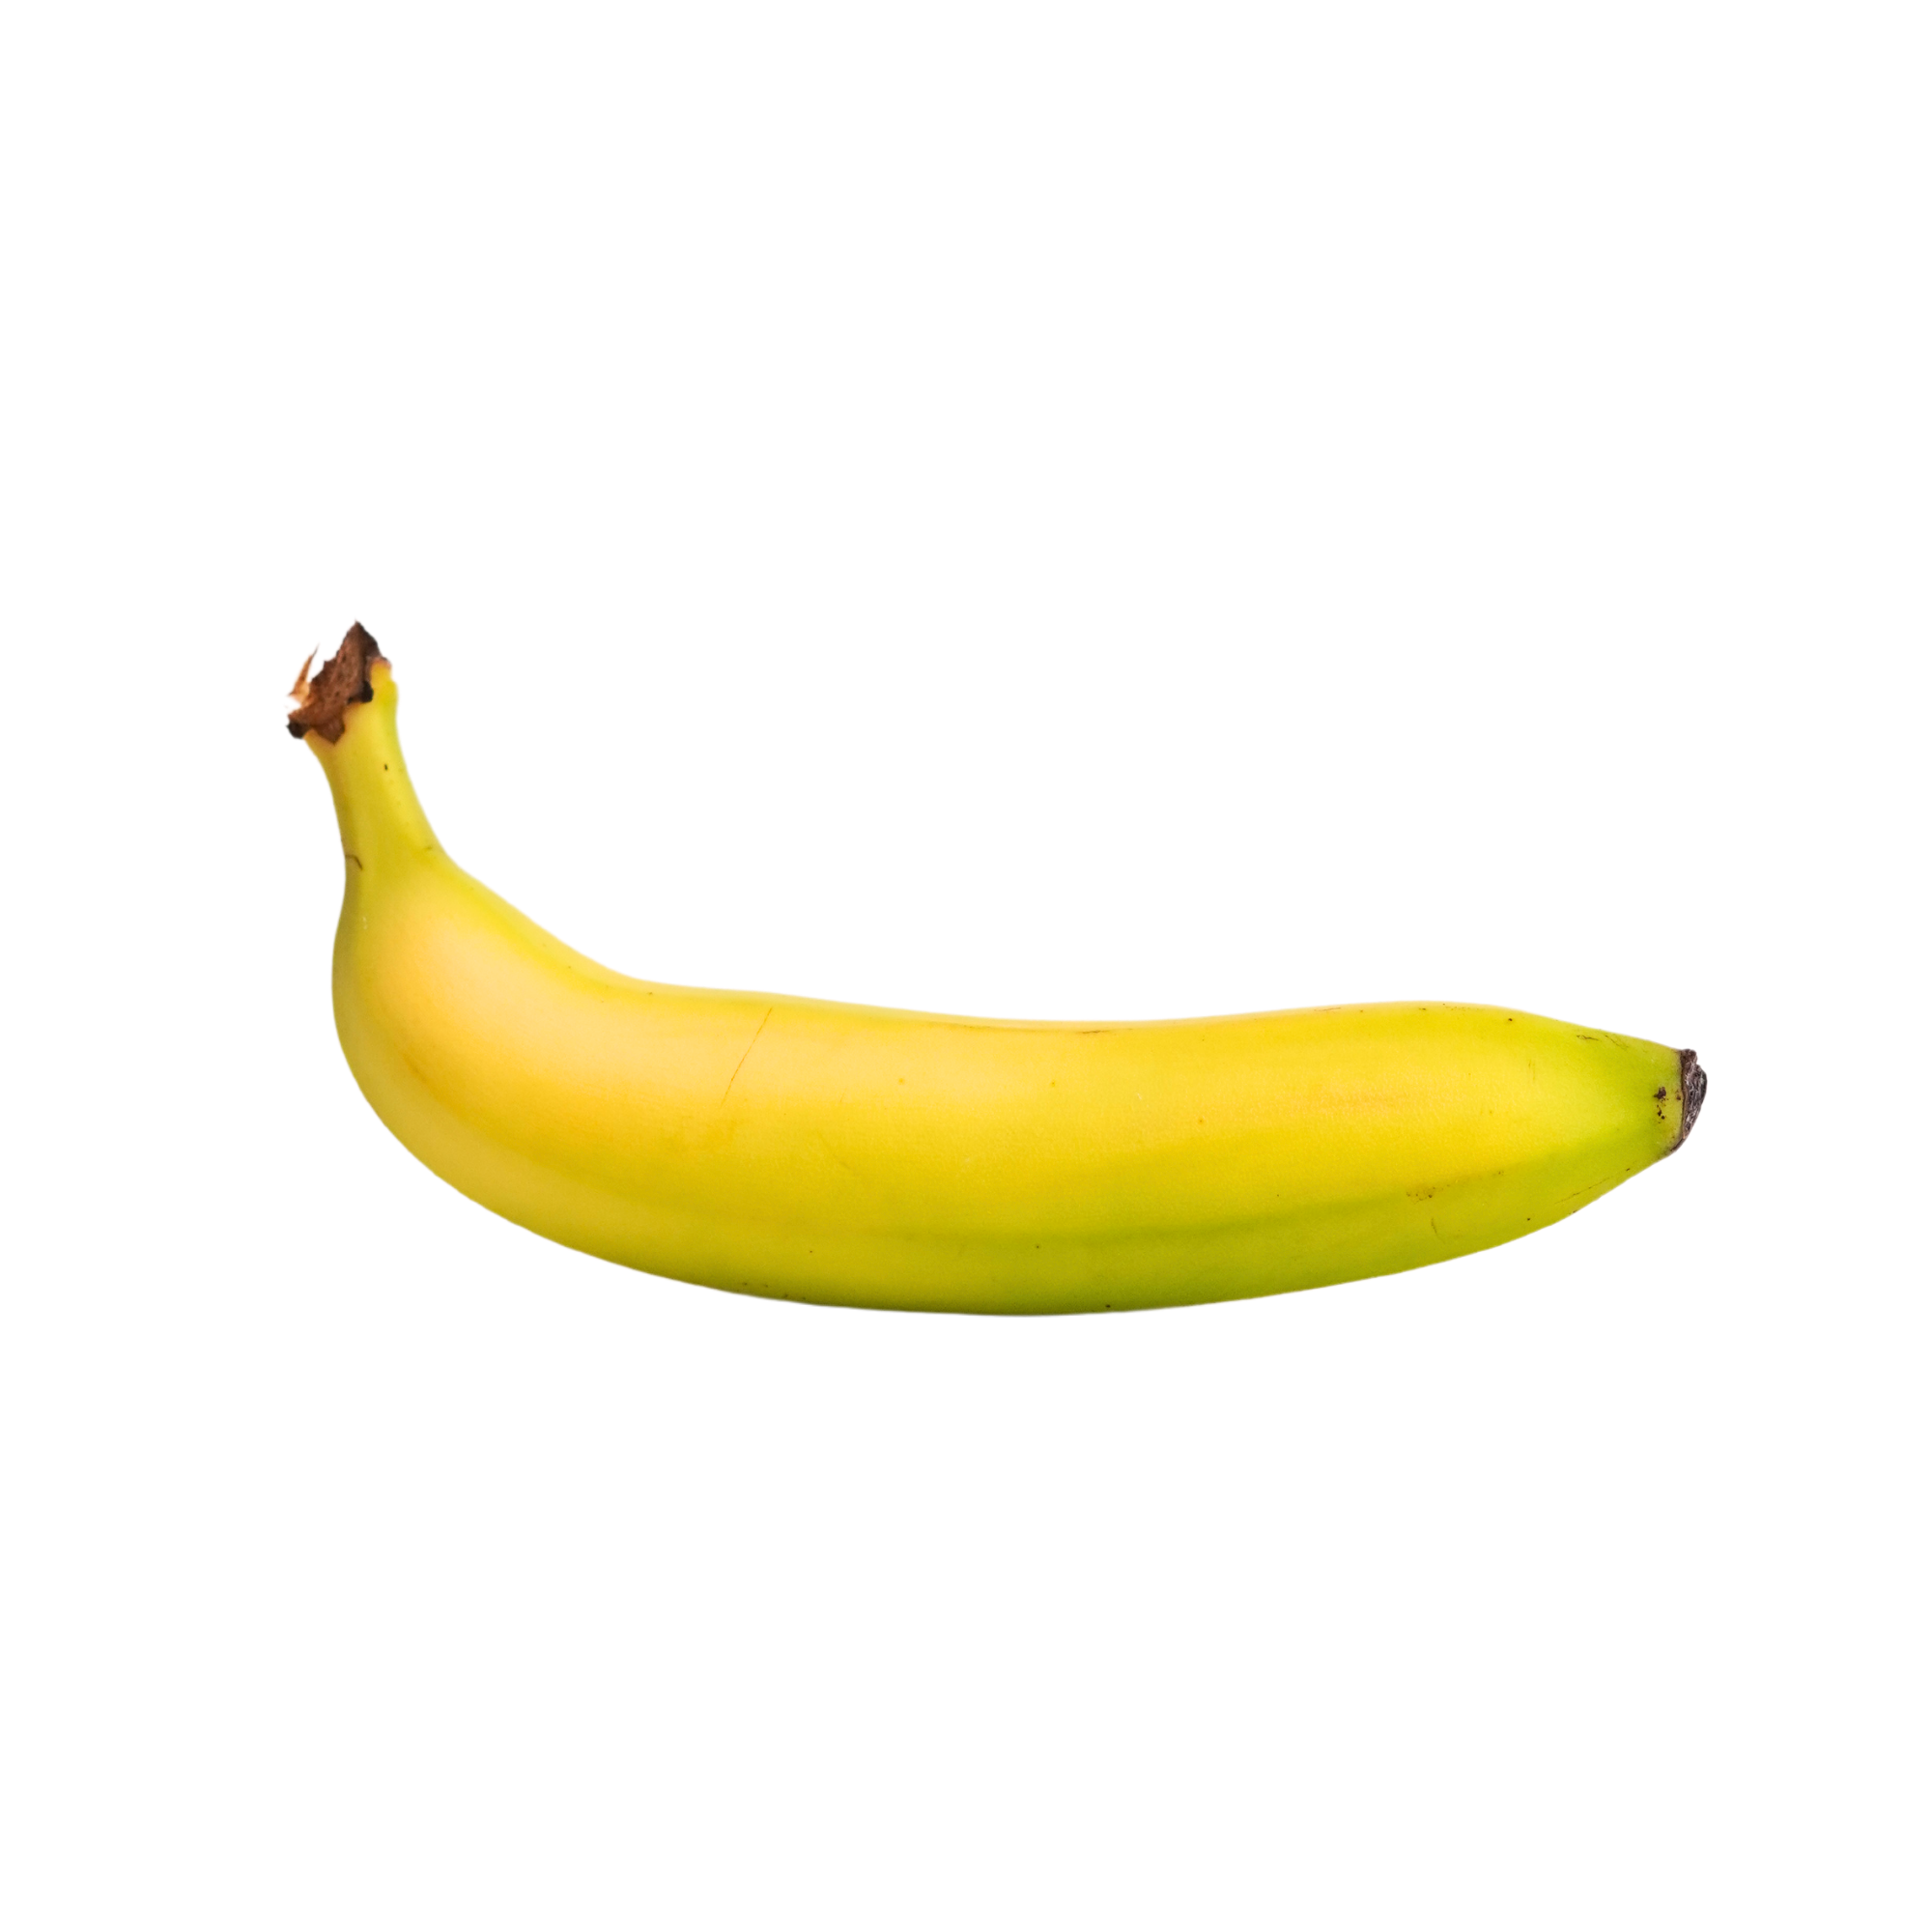 Banana Ripe 1 Count